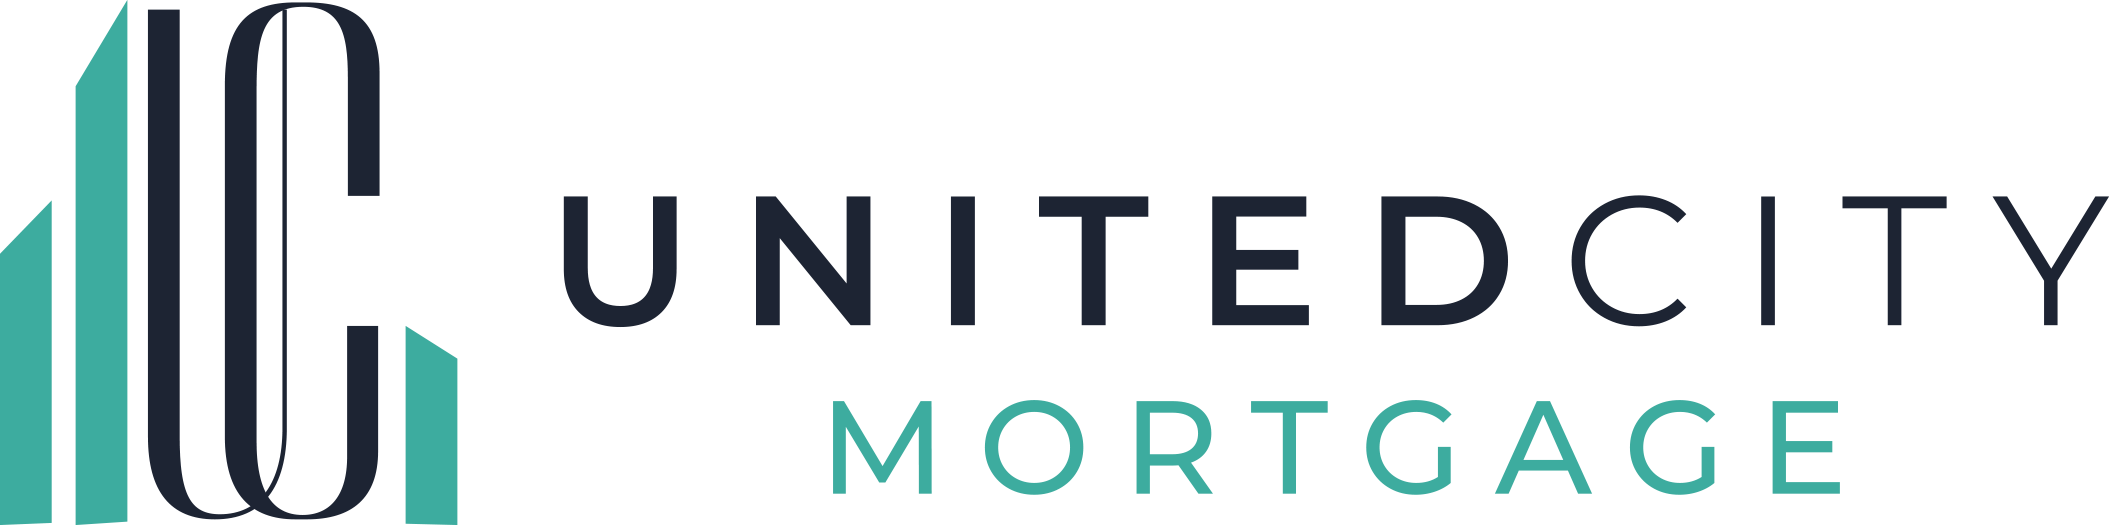 United City Partners